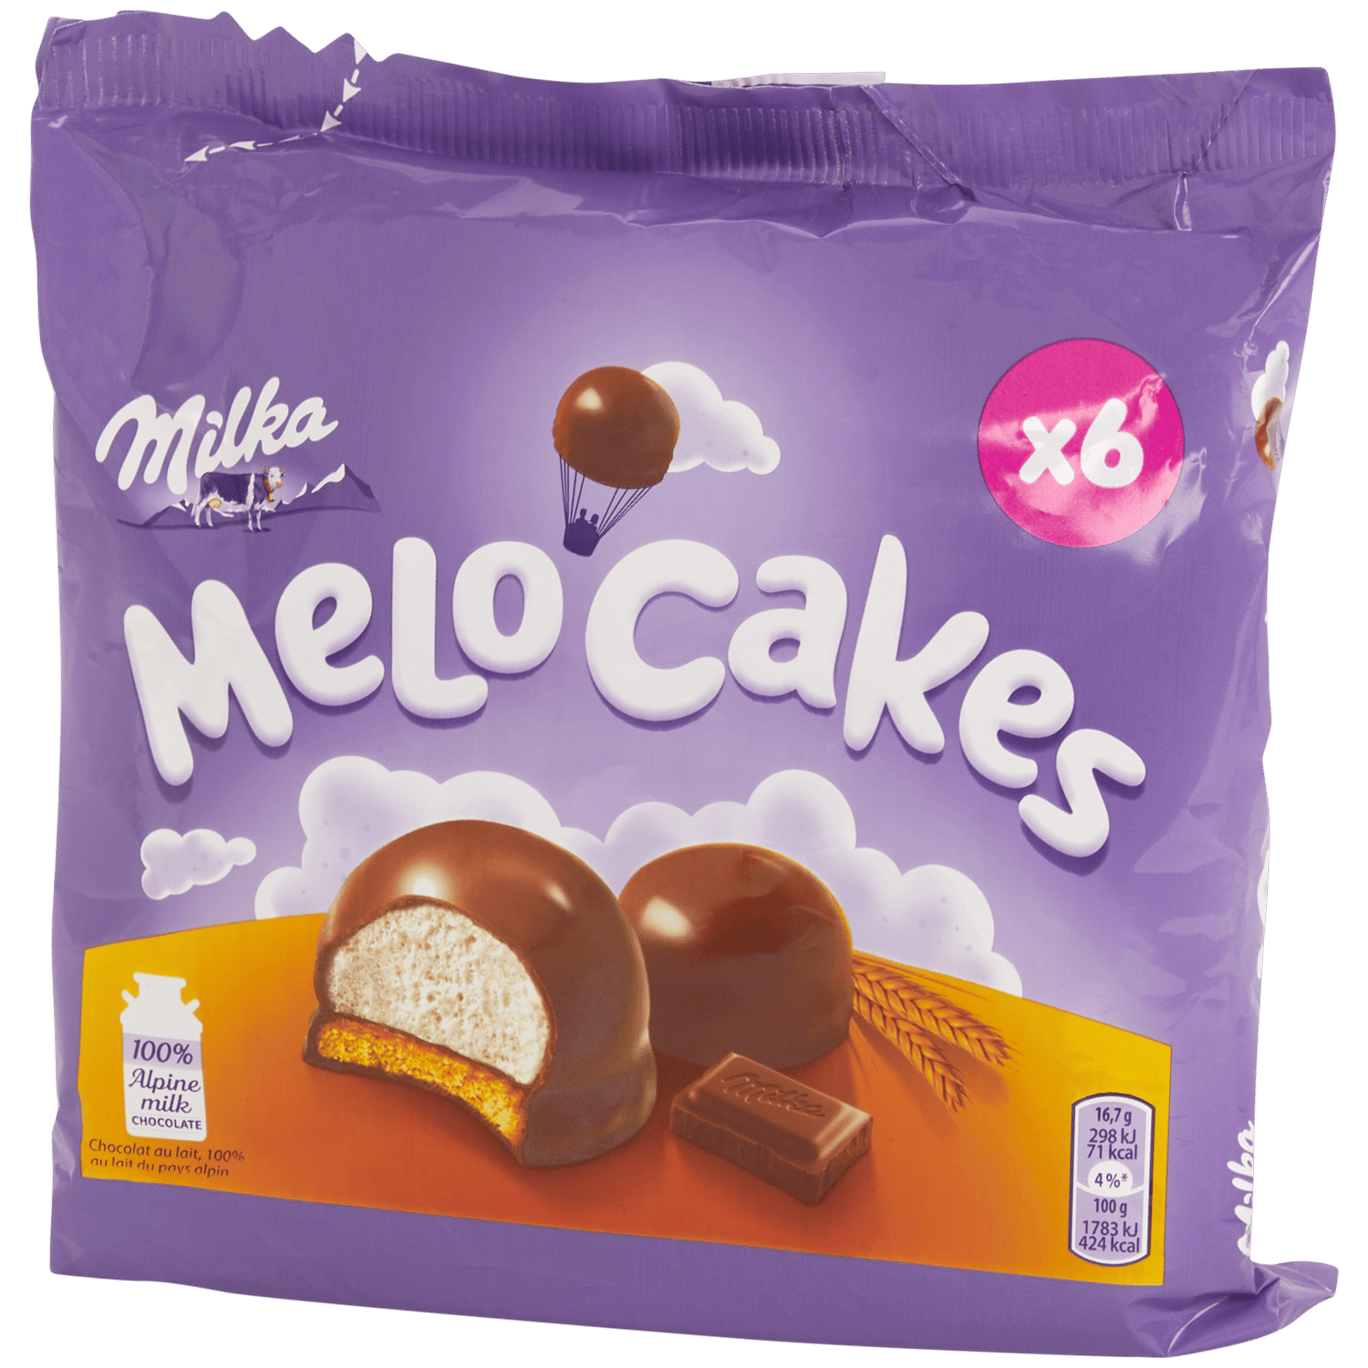 Milka Melo Cakes